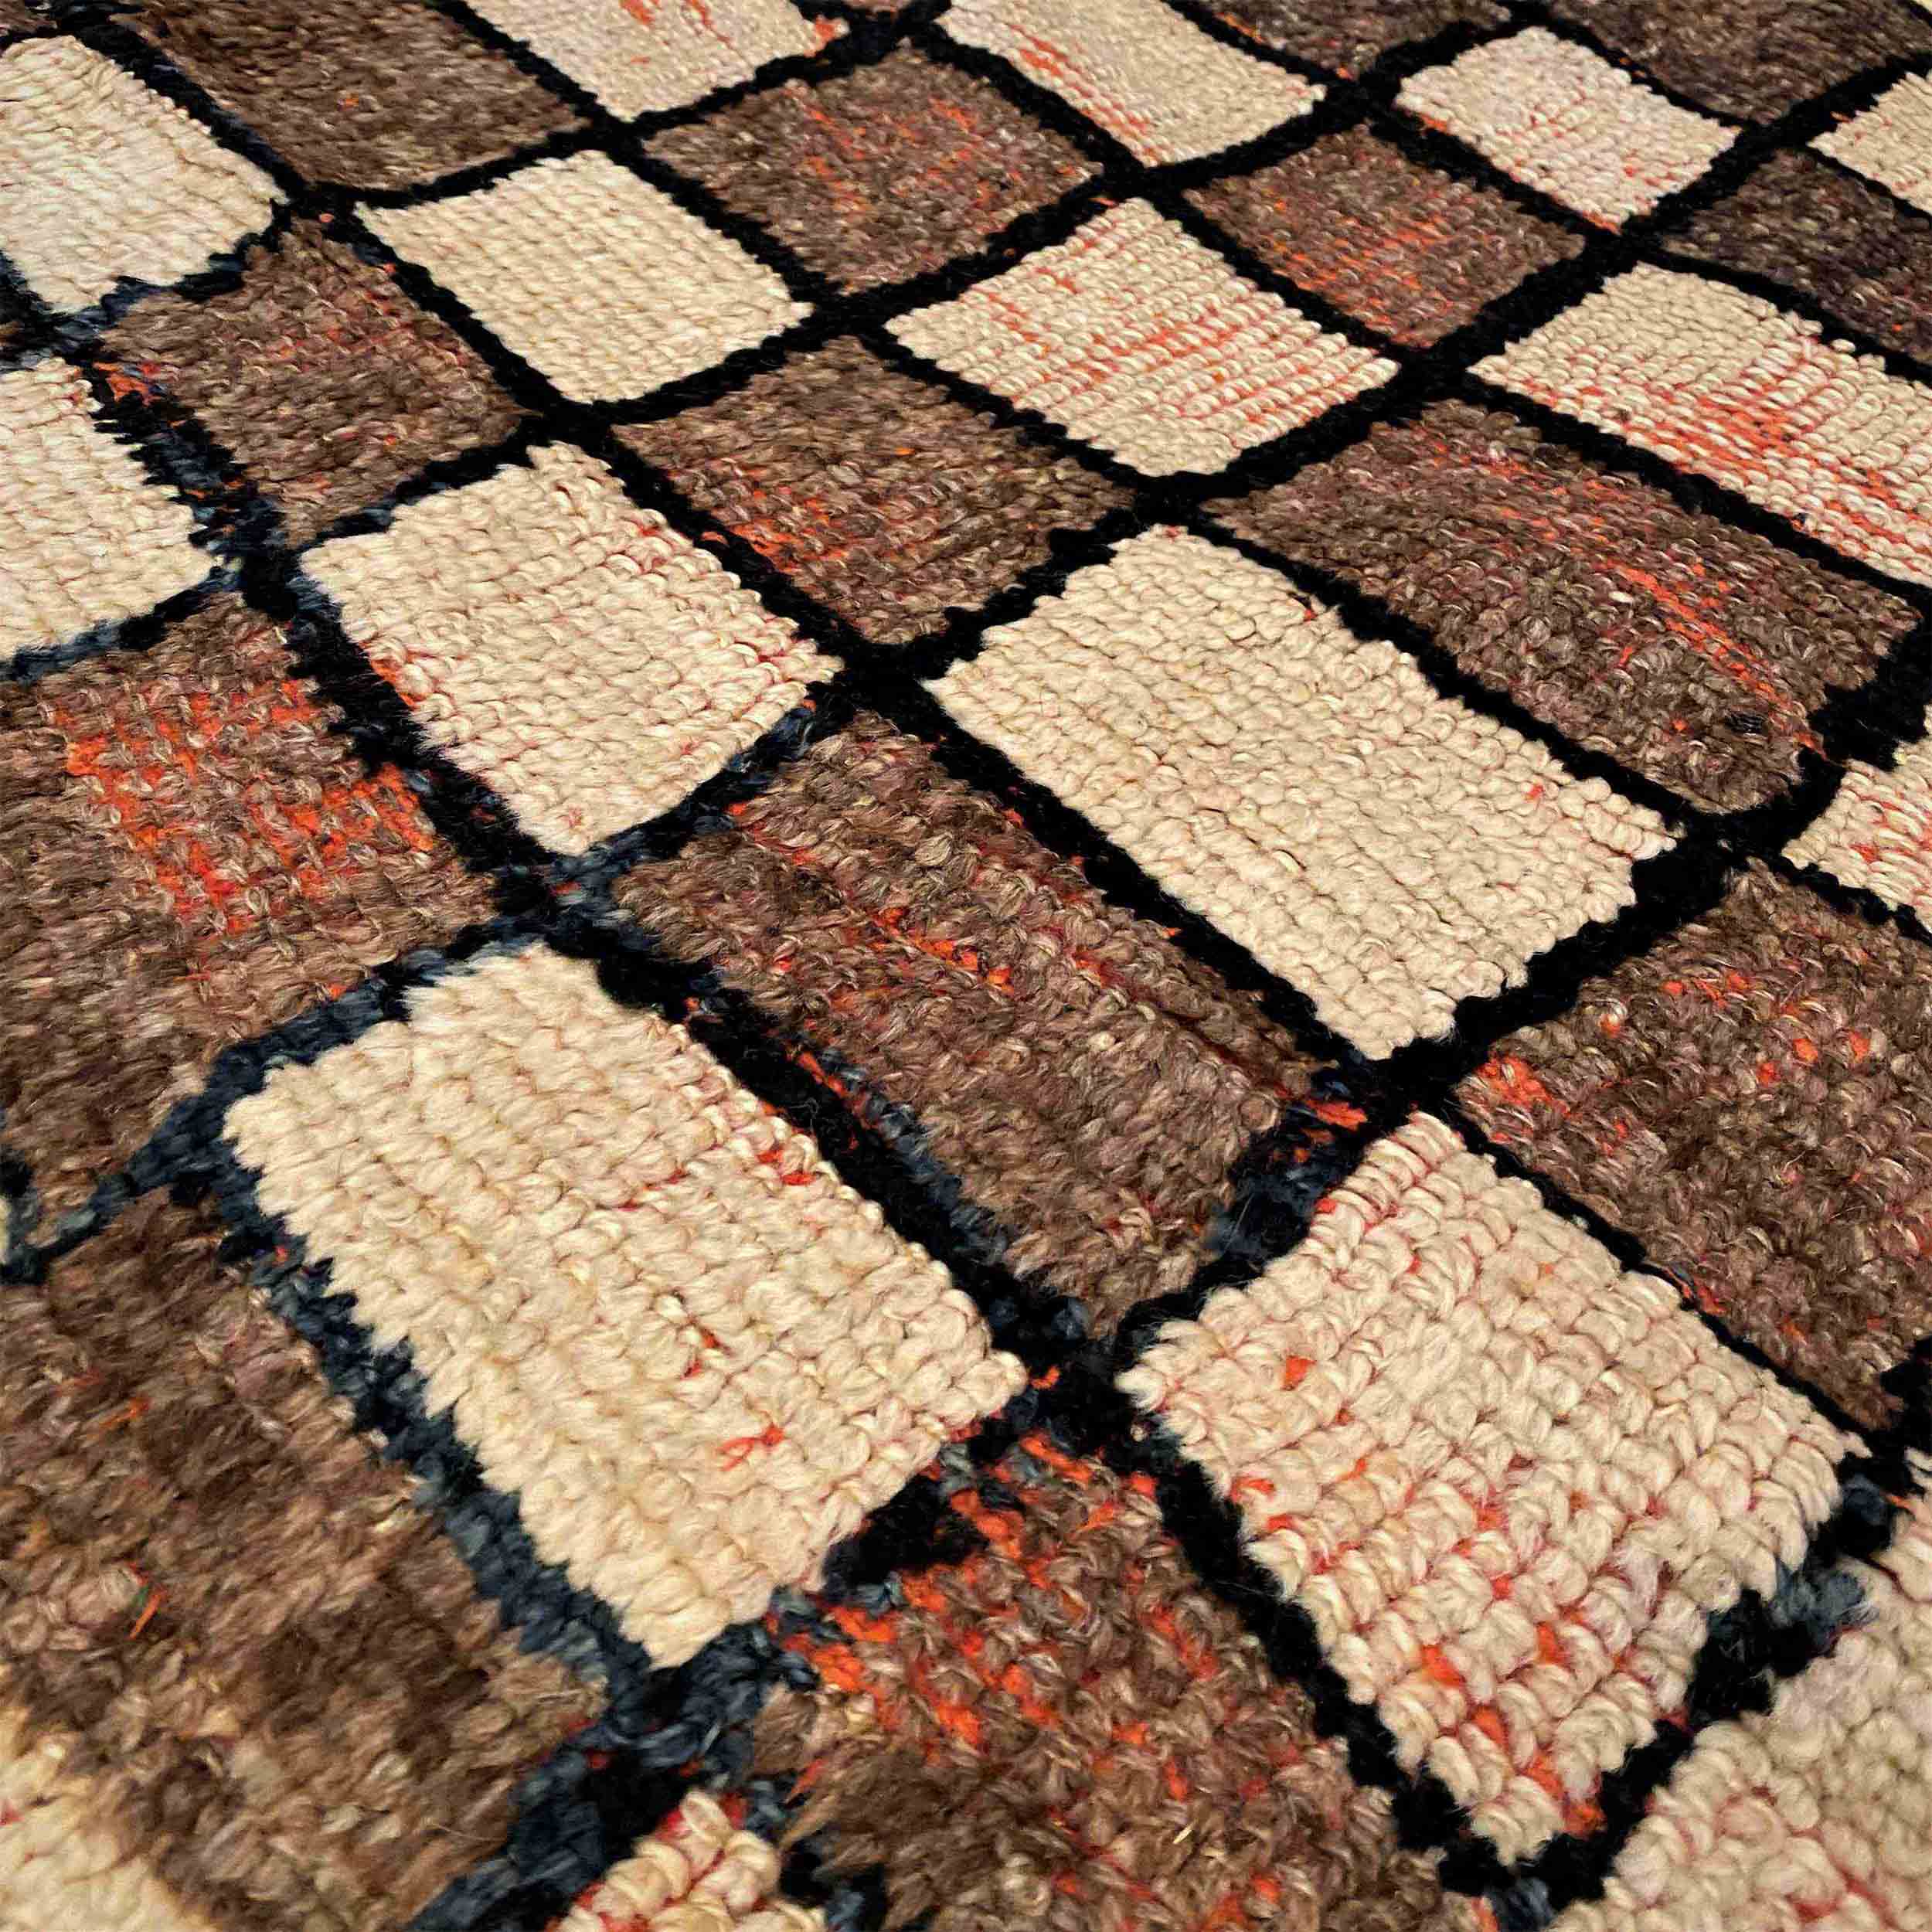 Checkerboard Telouet rug